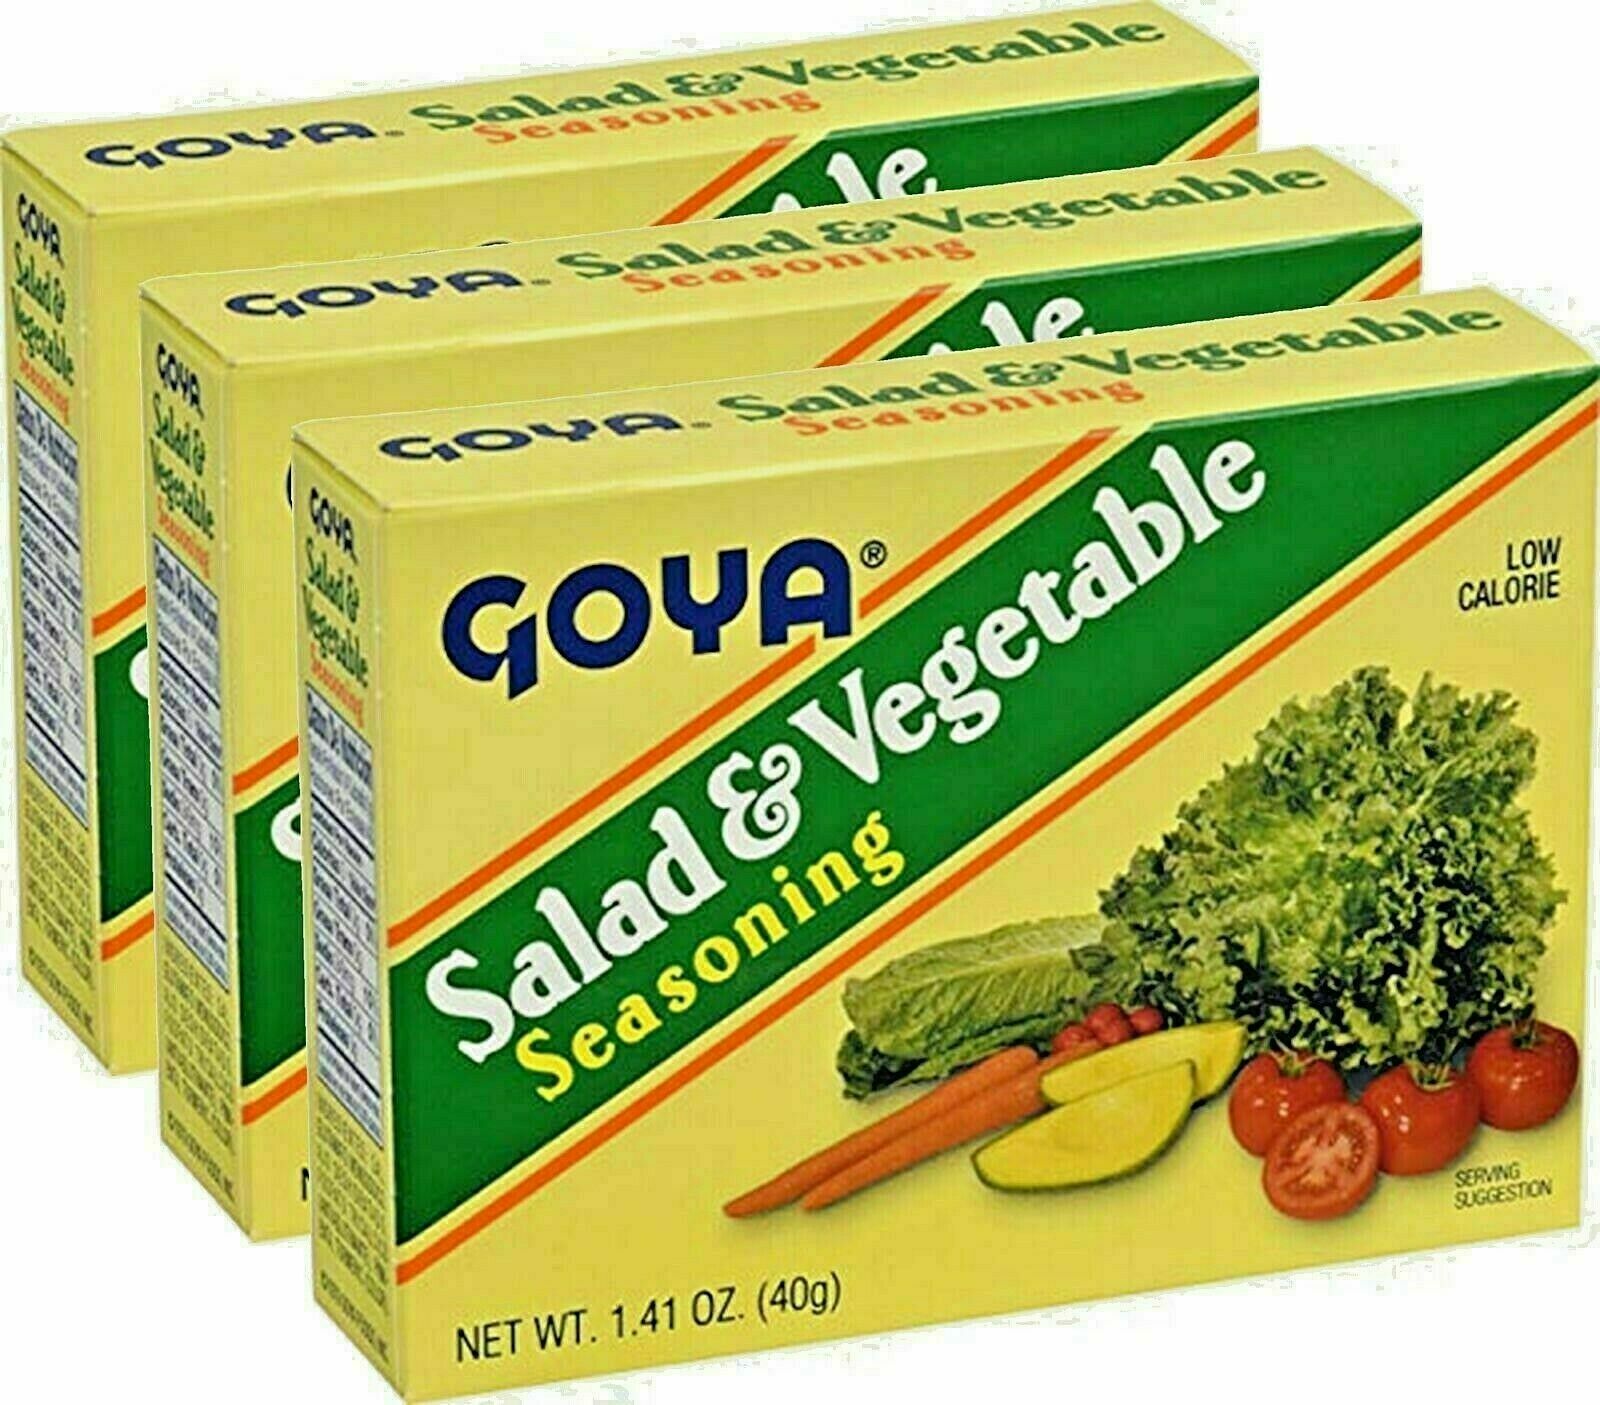 Salad & Vegetable Seasoning